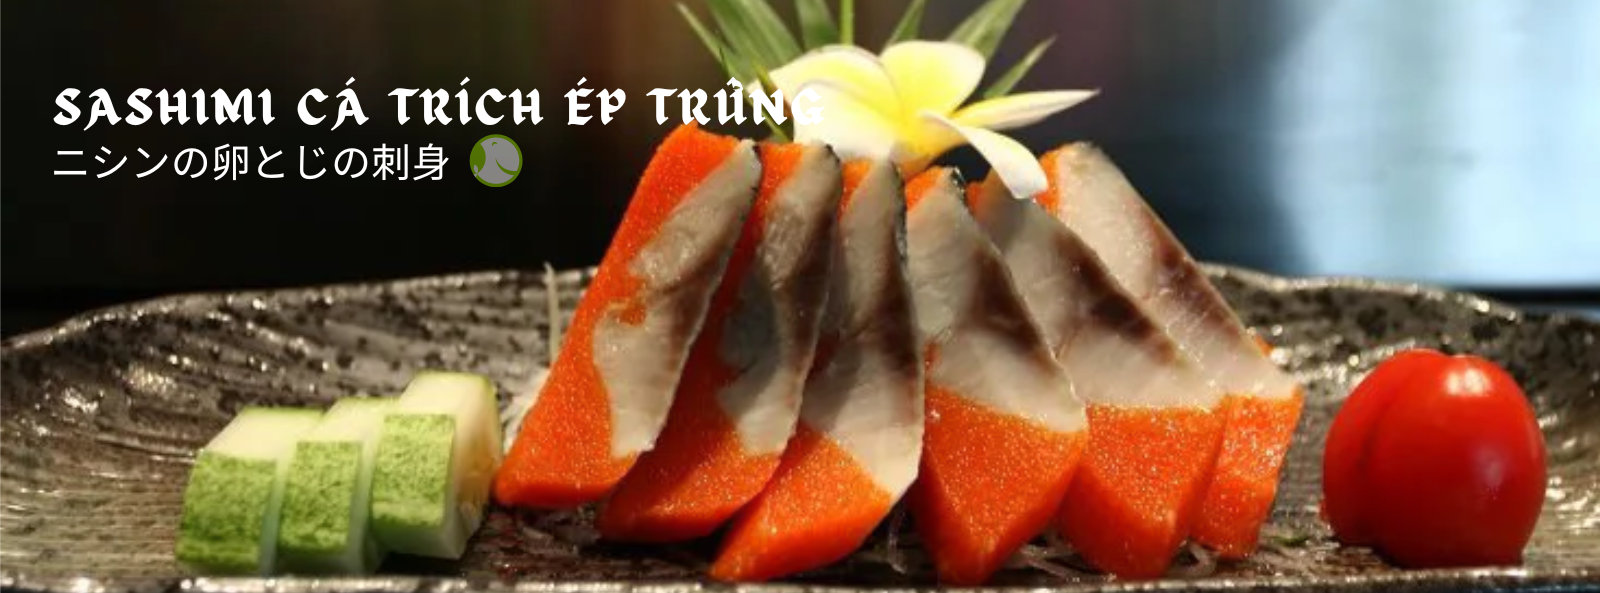 Sashimi Cá Trích Ép Trứng